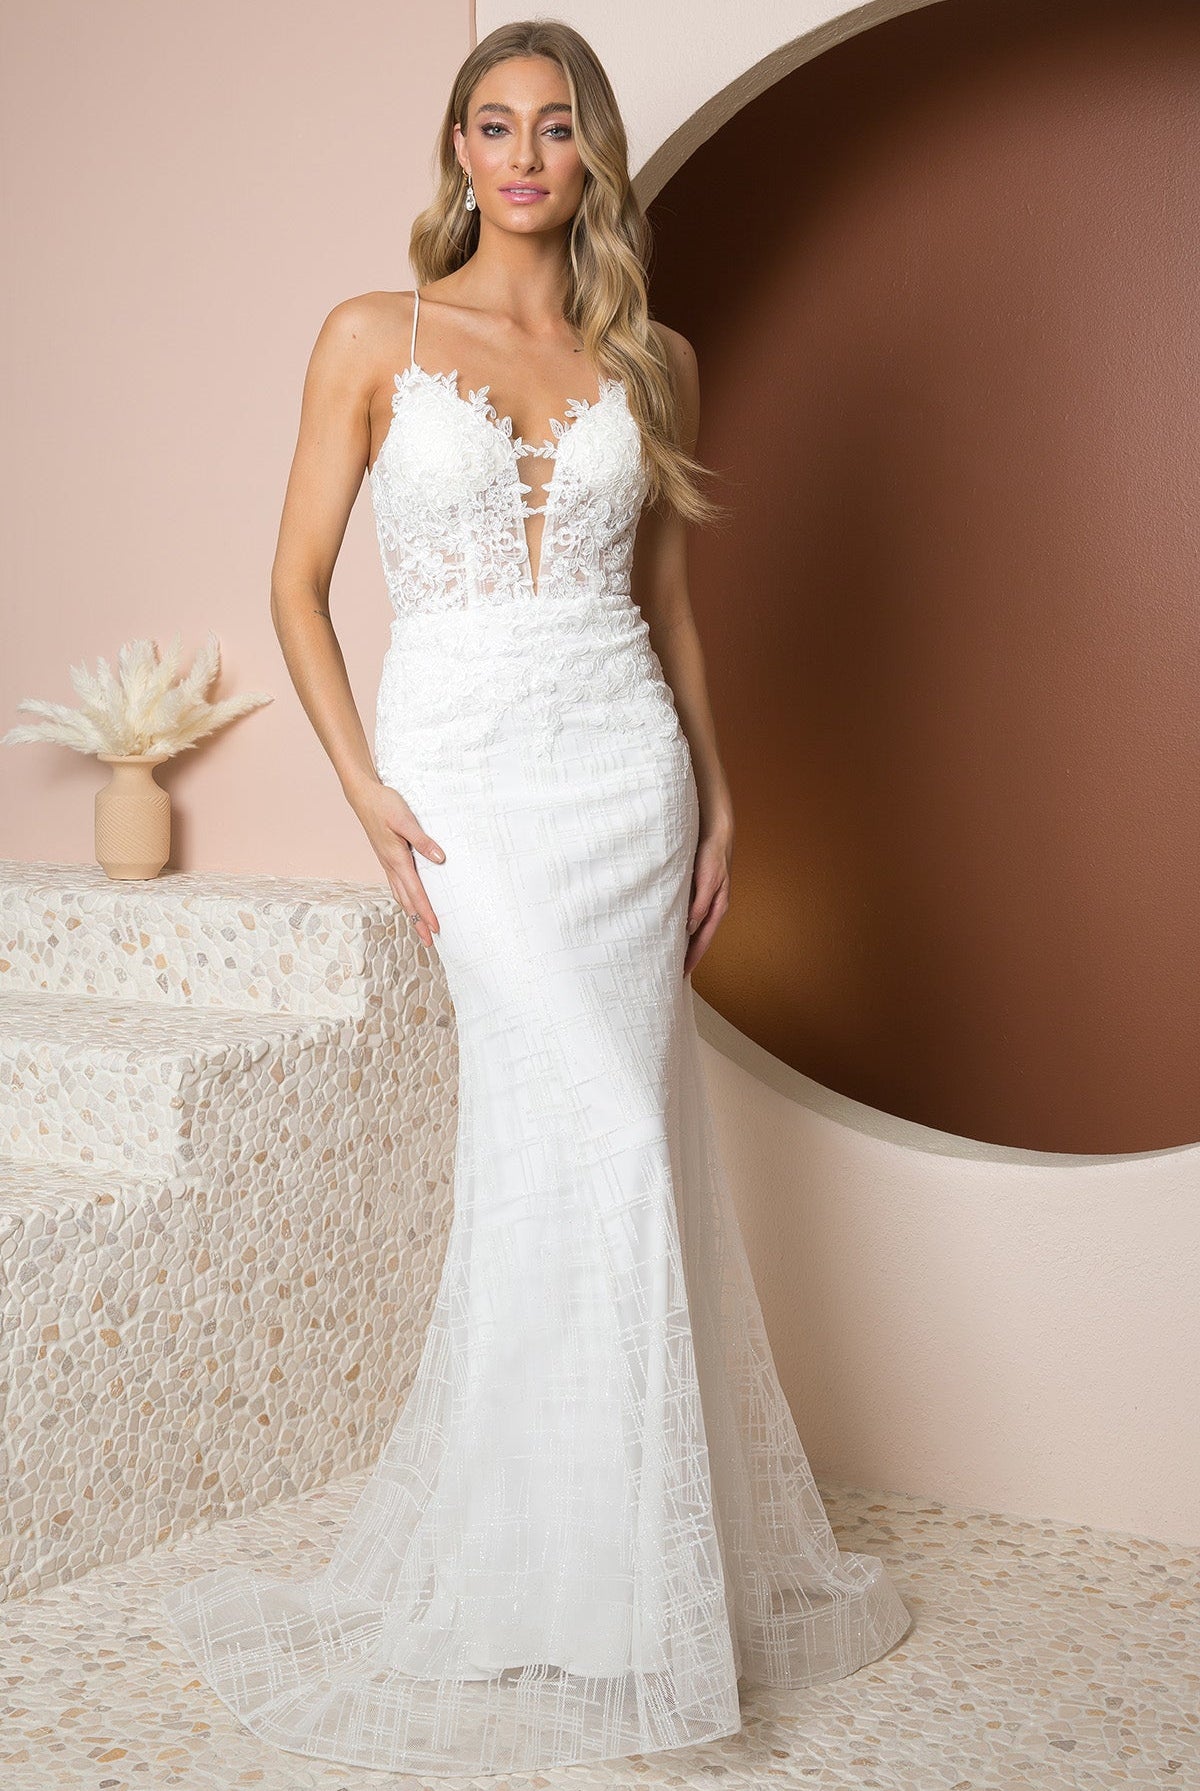 Glittery Deep V-Neck Bodice Trumpet Skirt Long Wedding Dress NXR282-1W-Wedding Dress-smcfashion.com